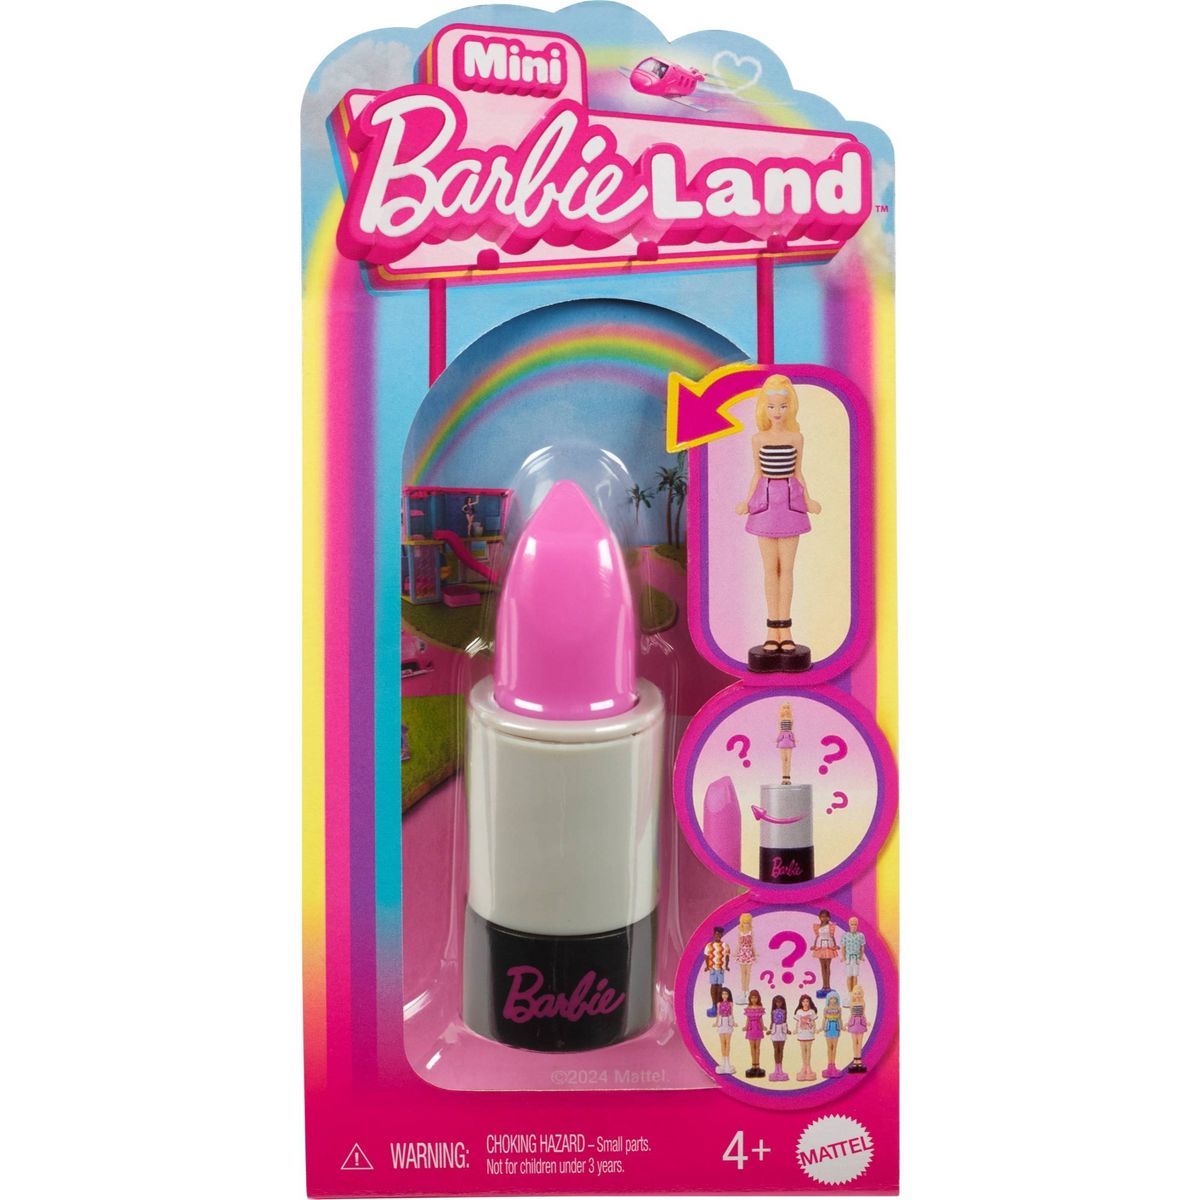 Barbie Land 6" Mini Core Dolls | Target